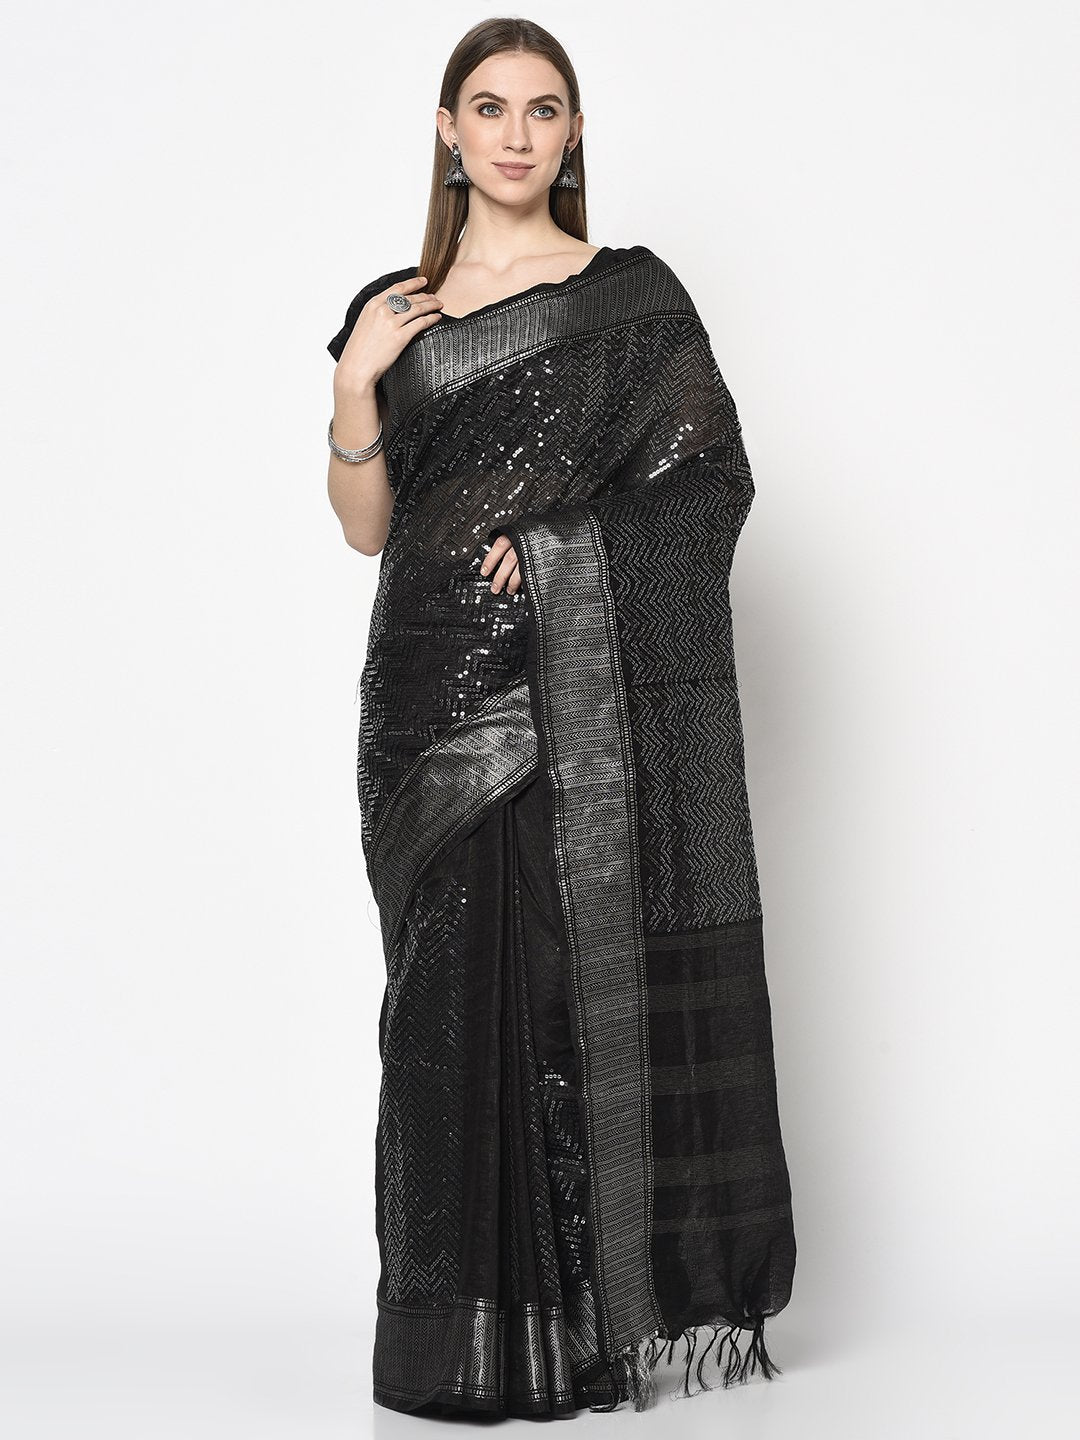 Shop Handloom Cotton Saree In Black Colour which is Saree online at simaaya At